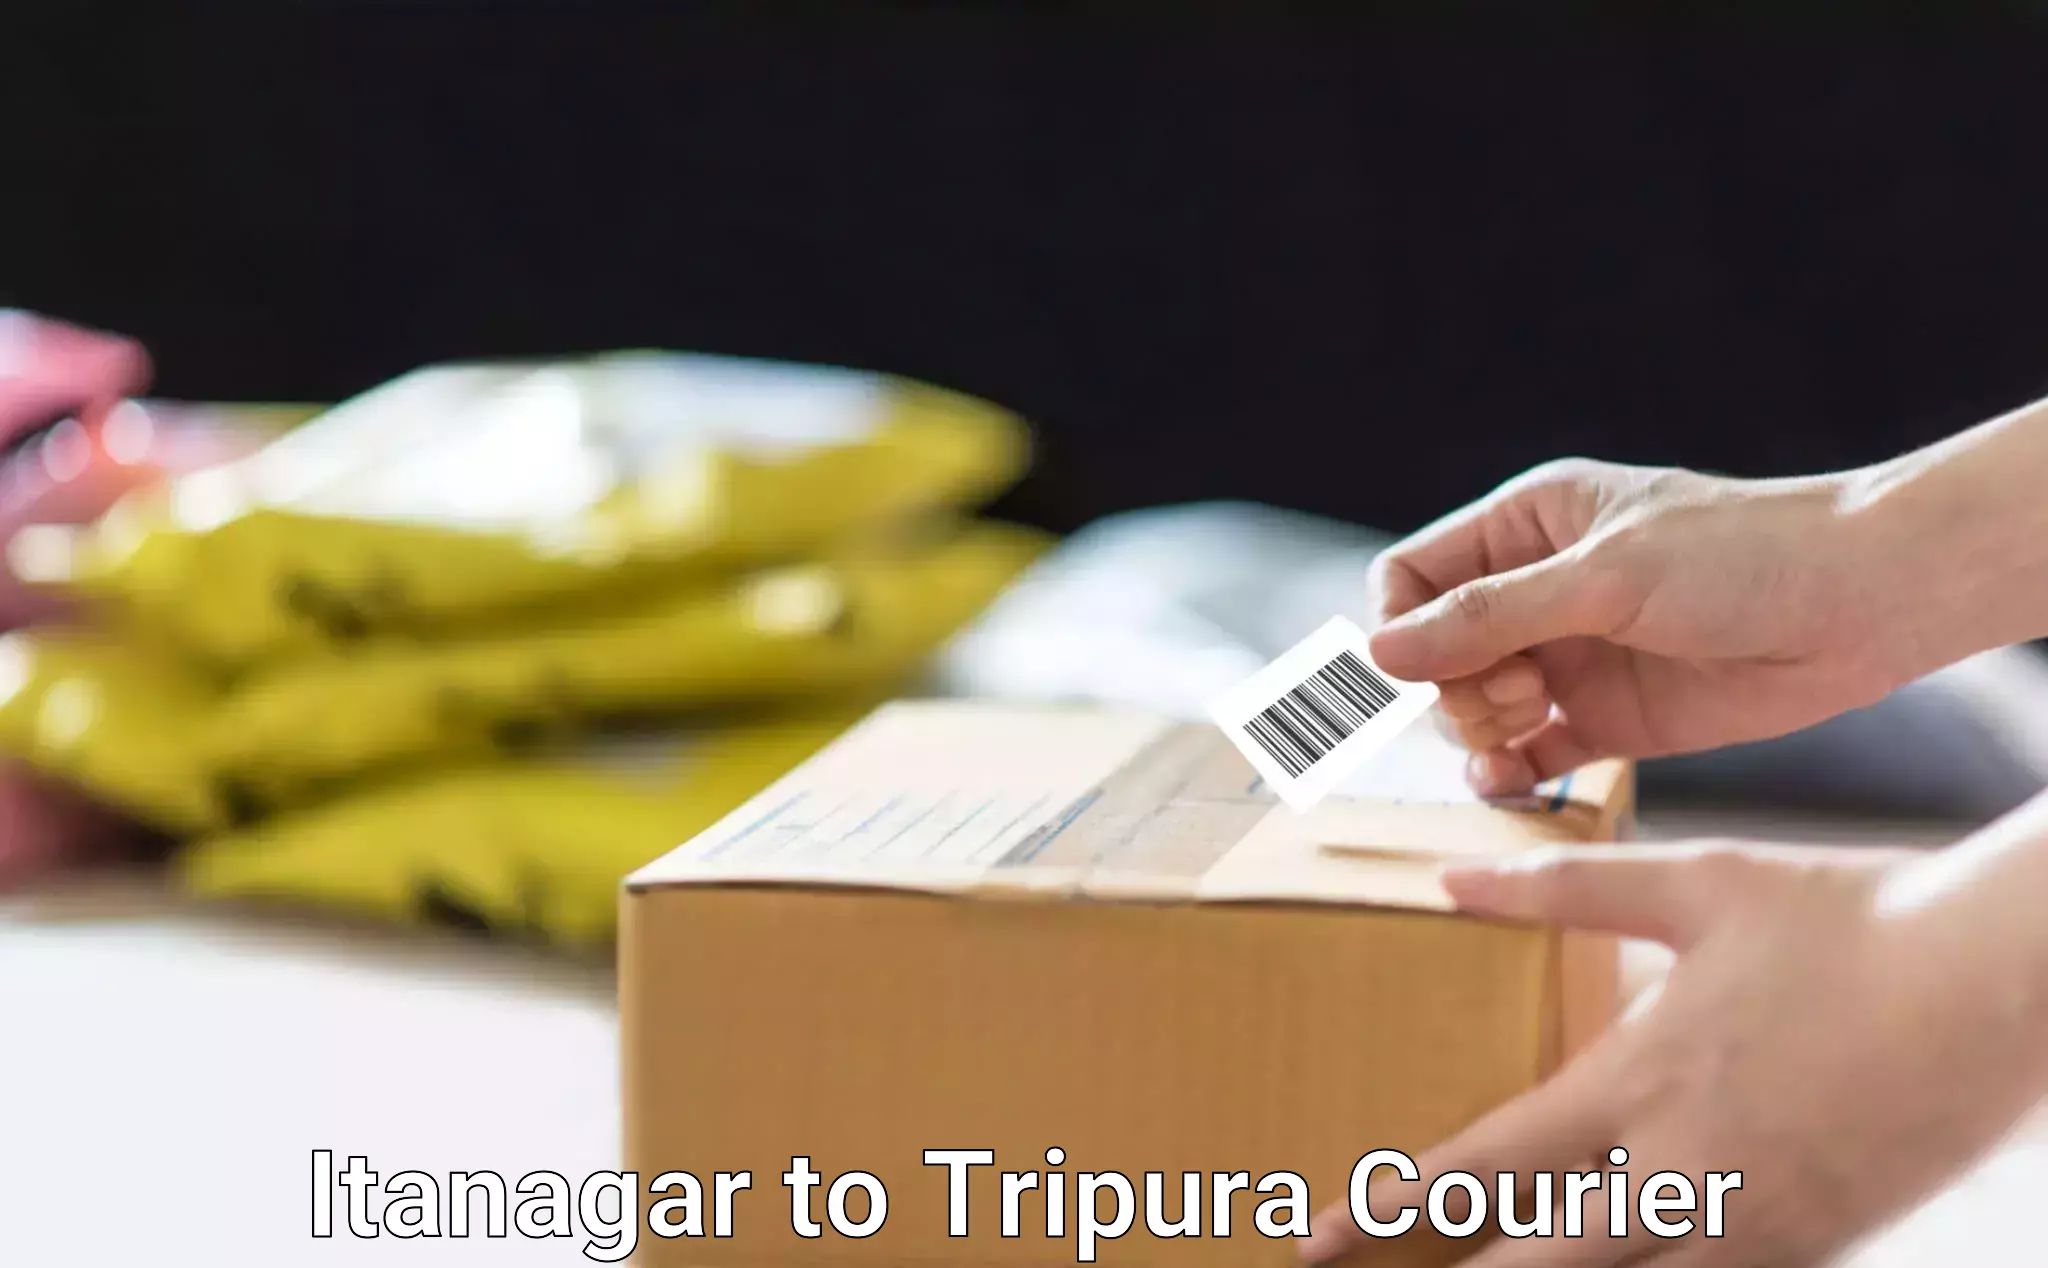 Online shipping calculator Itanagar to Udaipur Tripura